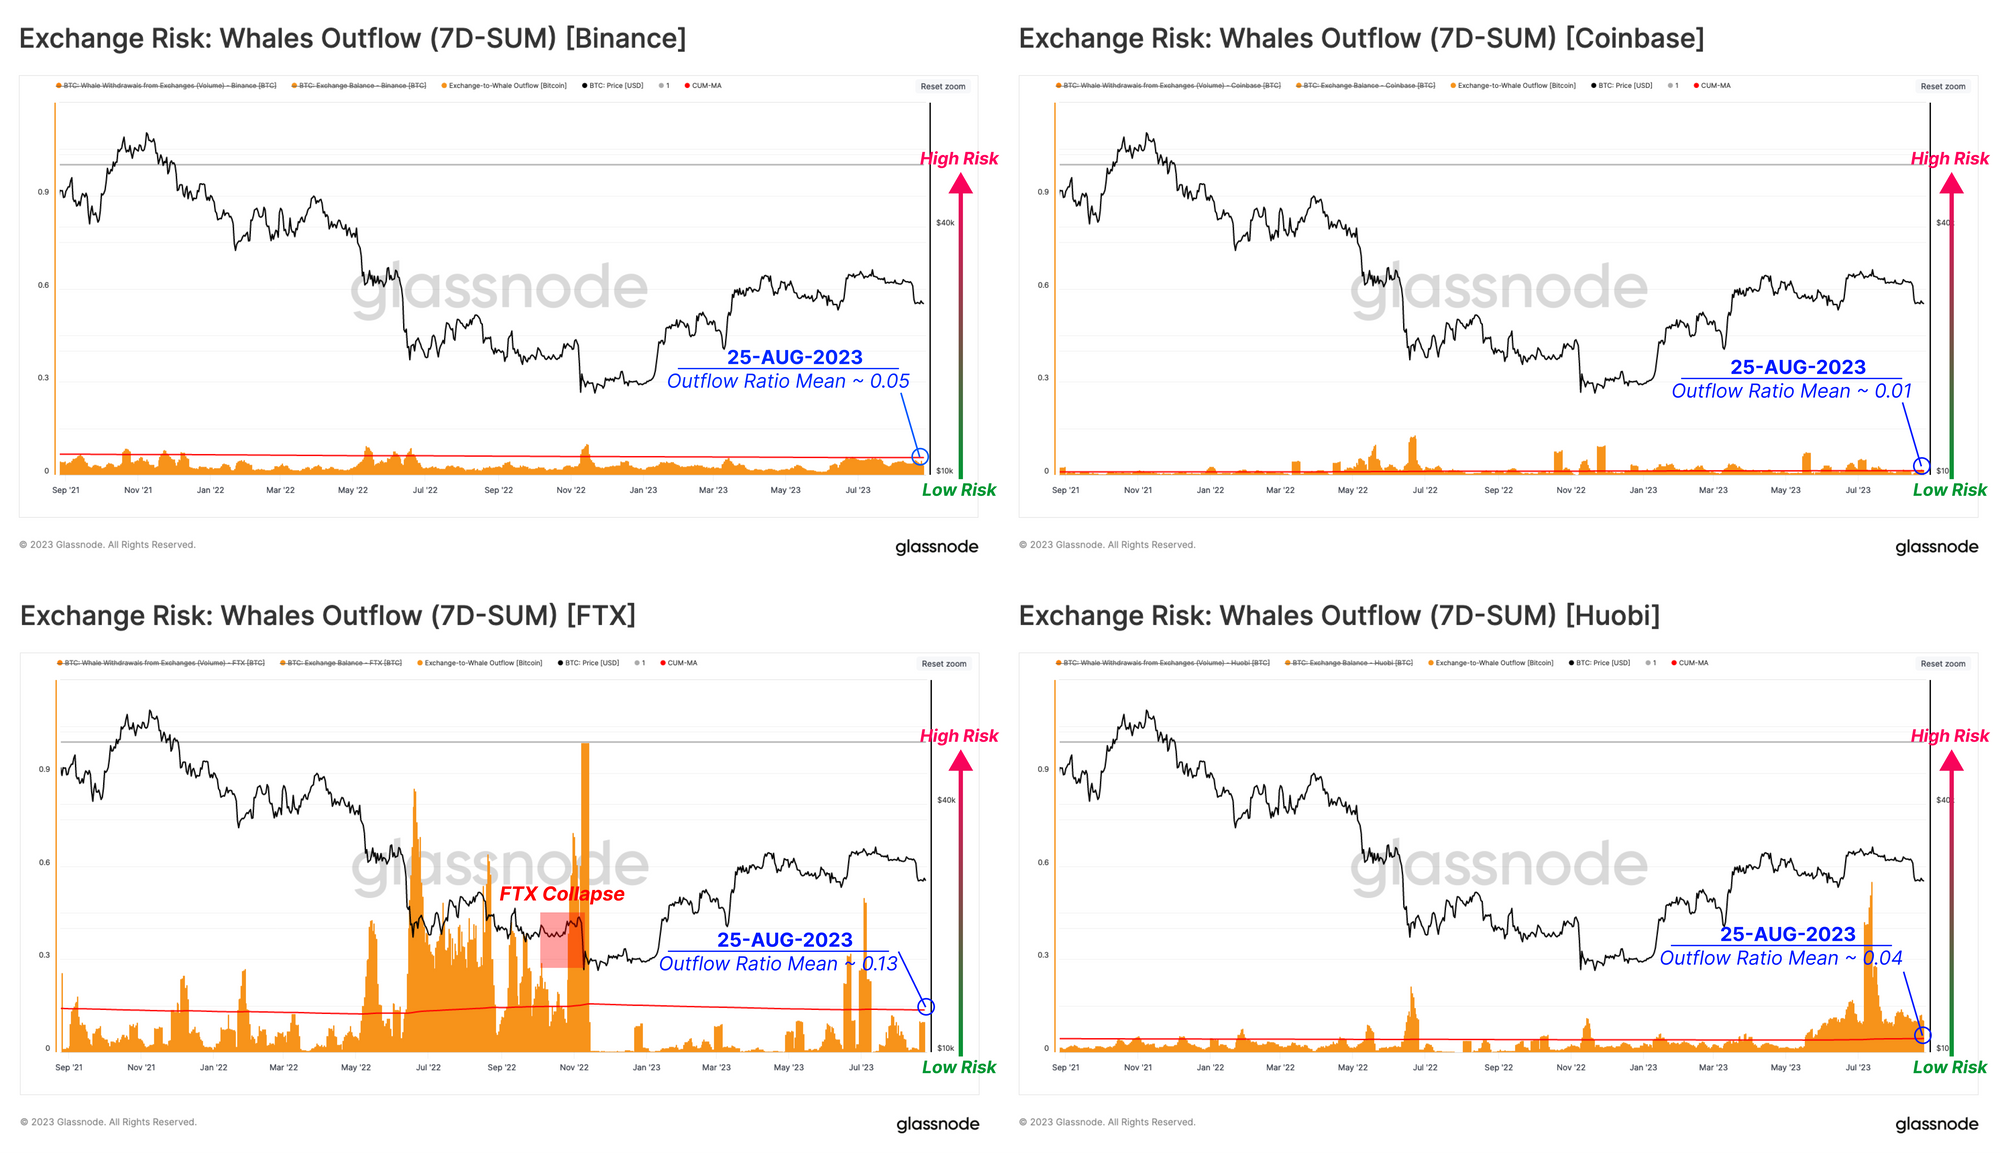 Evaluating Exchange Risk